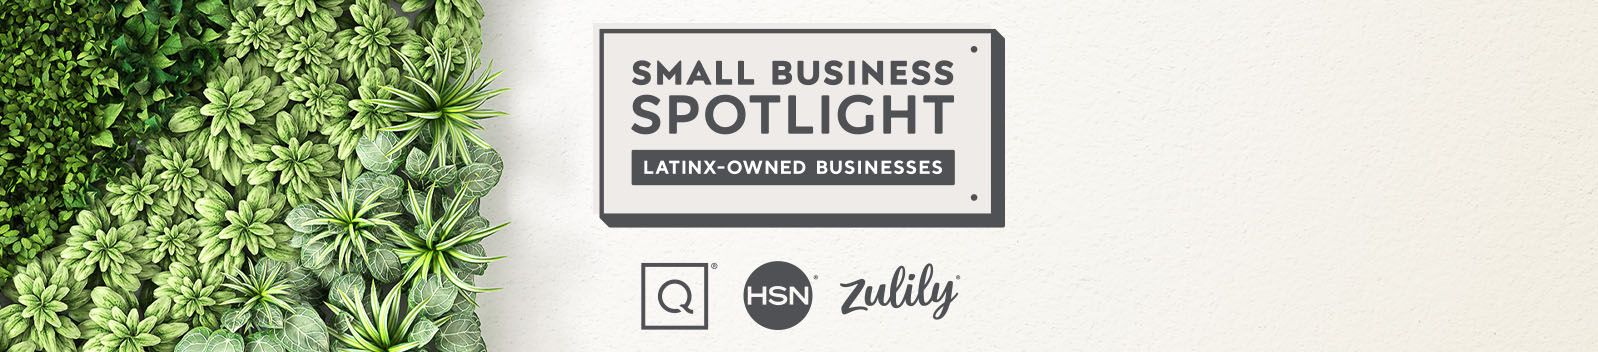 Small Business Spotlight: Hispanic- & Latinx-Owned Businesses 